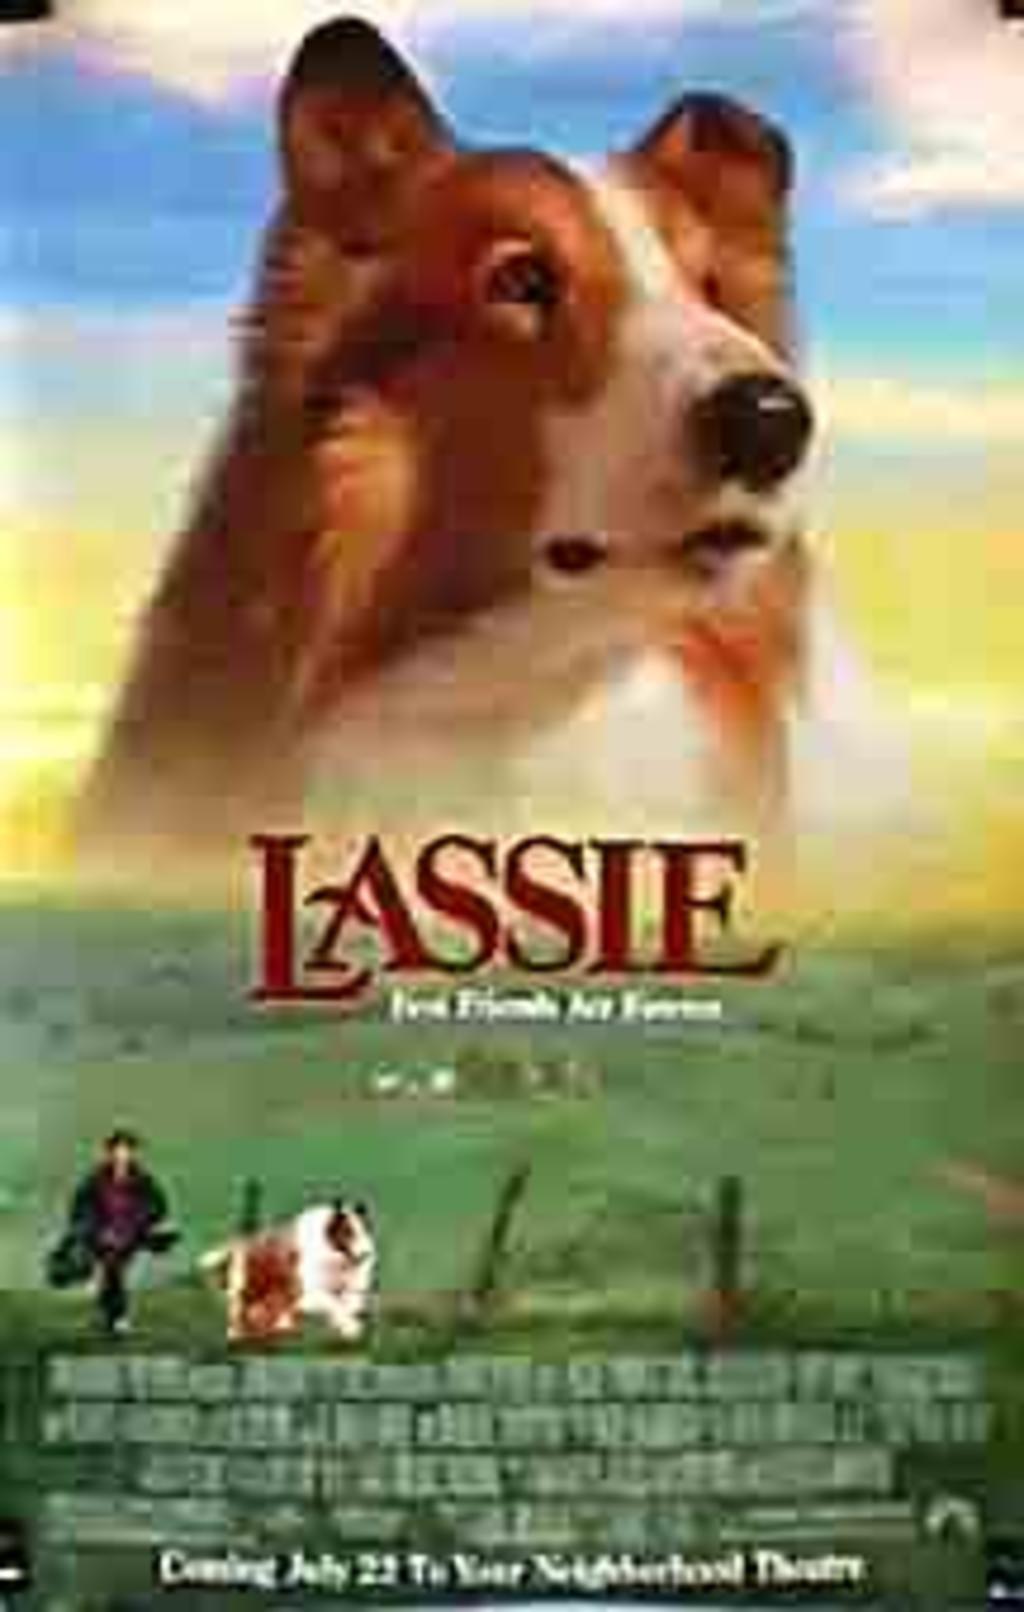 Watch Lassie On Netflix Today 